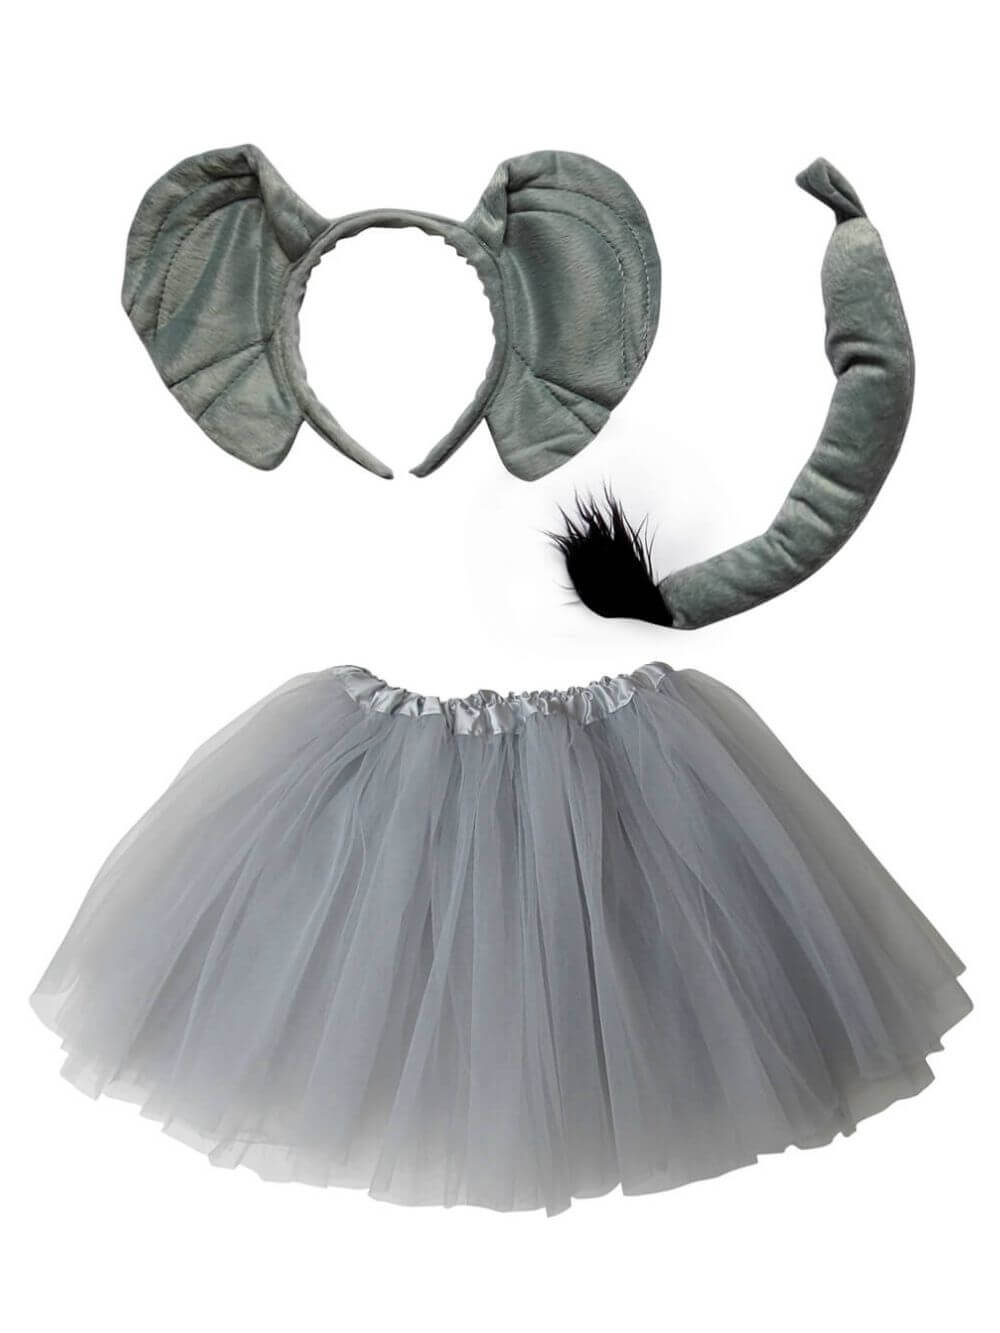 Adult Elephant Costume - Tutu Skirt, Tail, & Headband Set for Adult or Plus Size - Sydney So Sweet